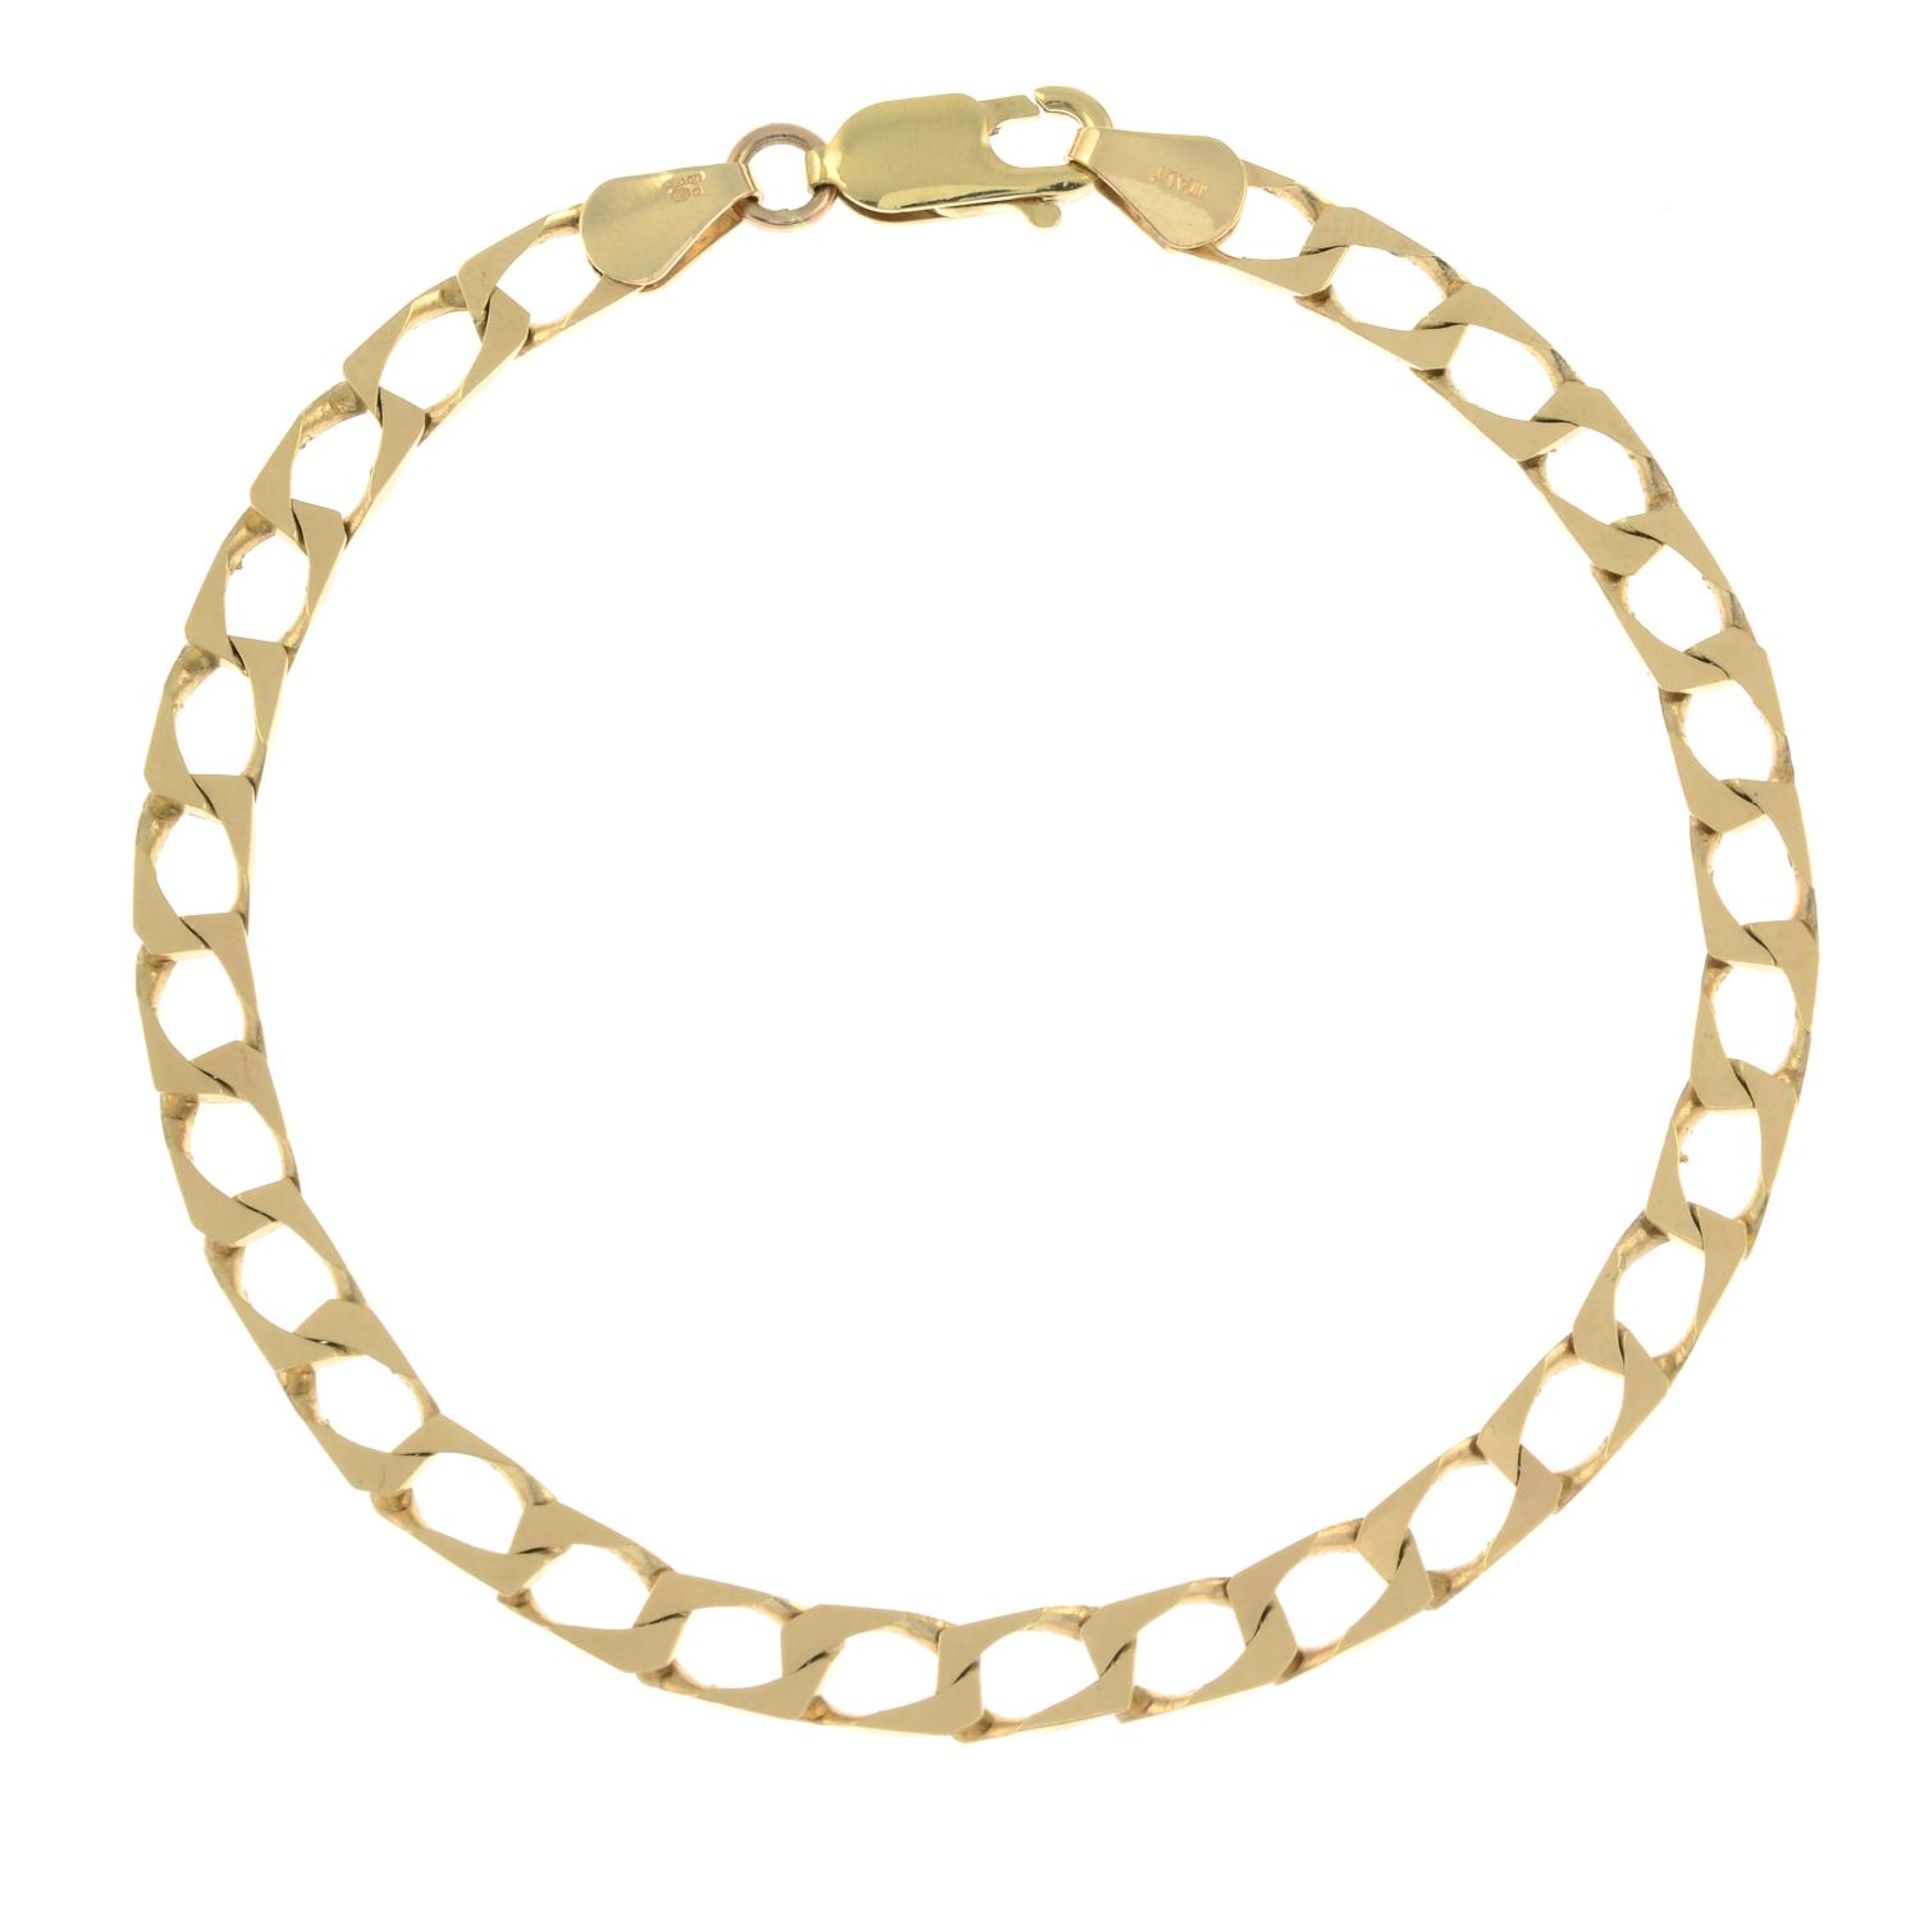 A 9ct gold curb-link chain bracelet.Hallmarks for Sheffield.Length 21cms.